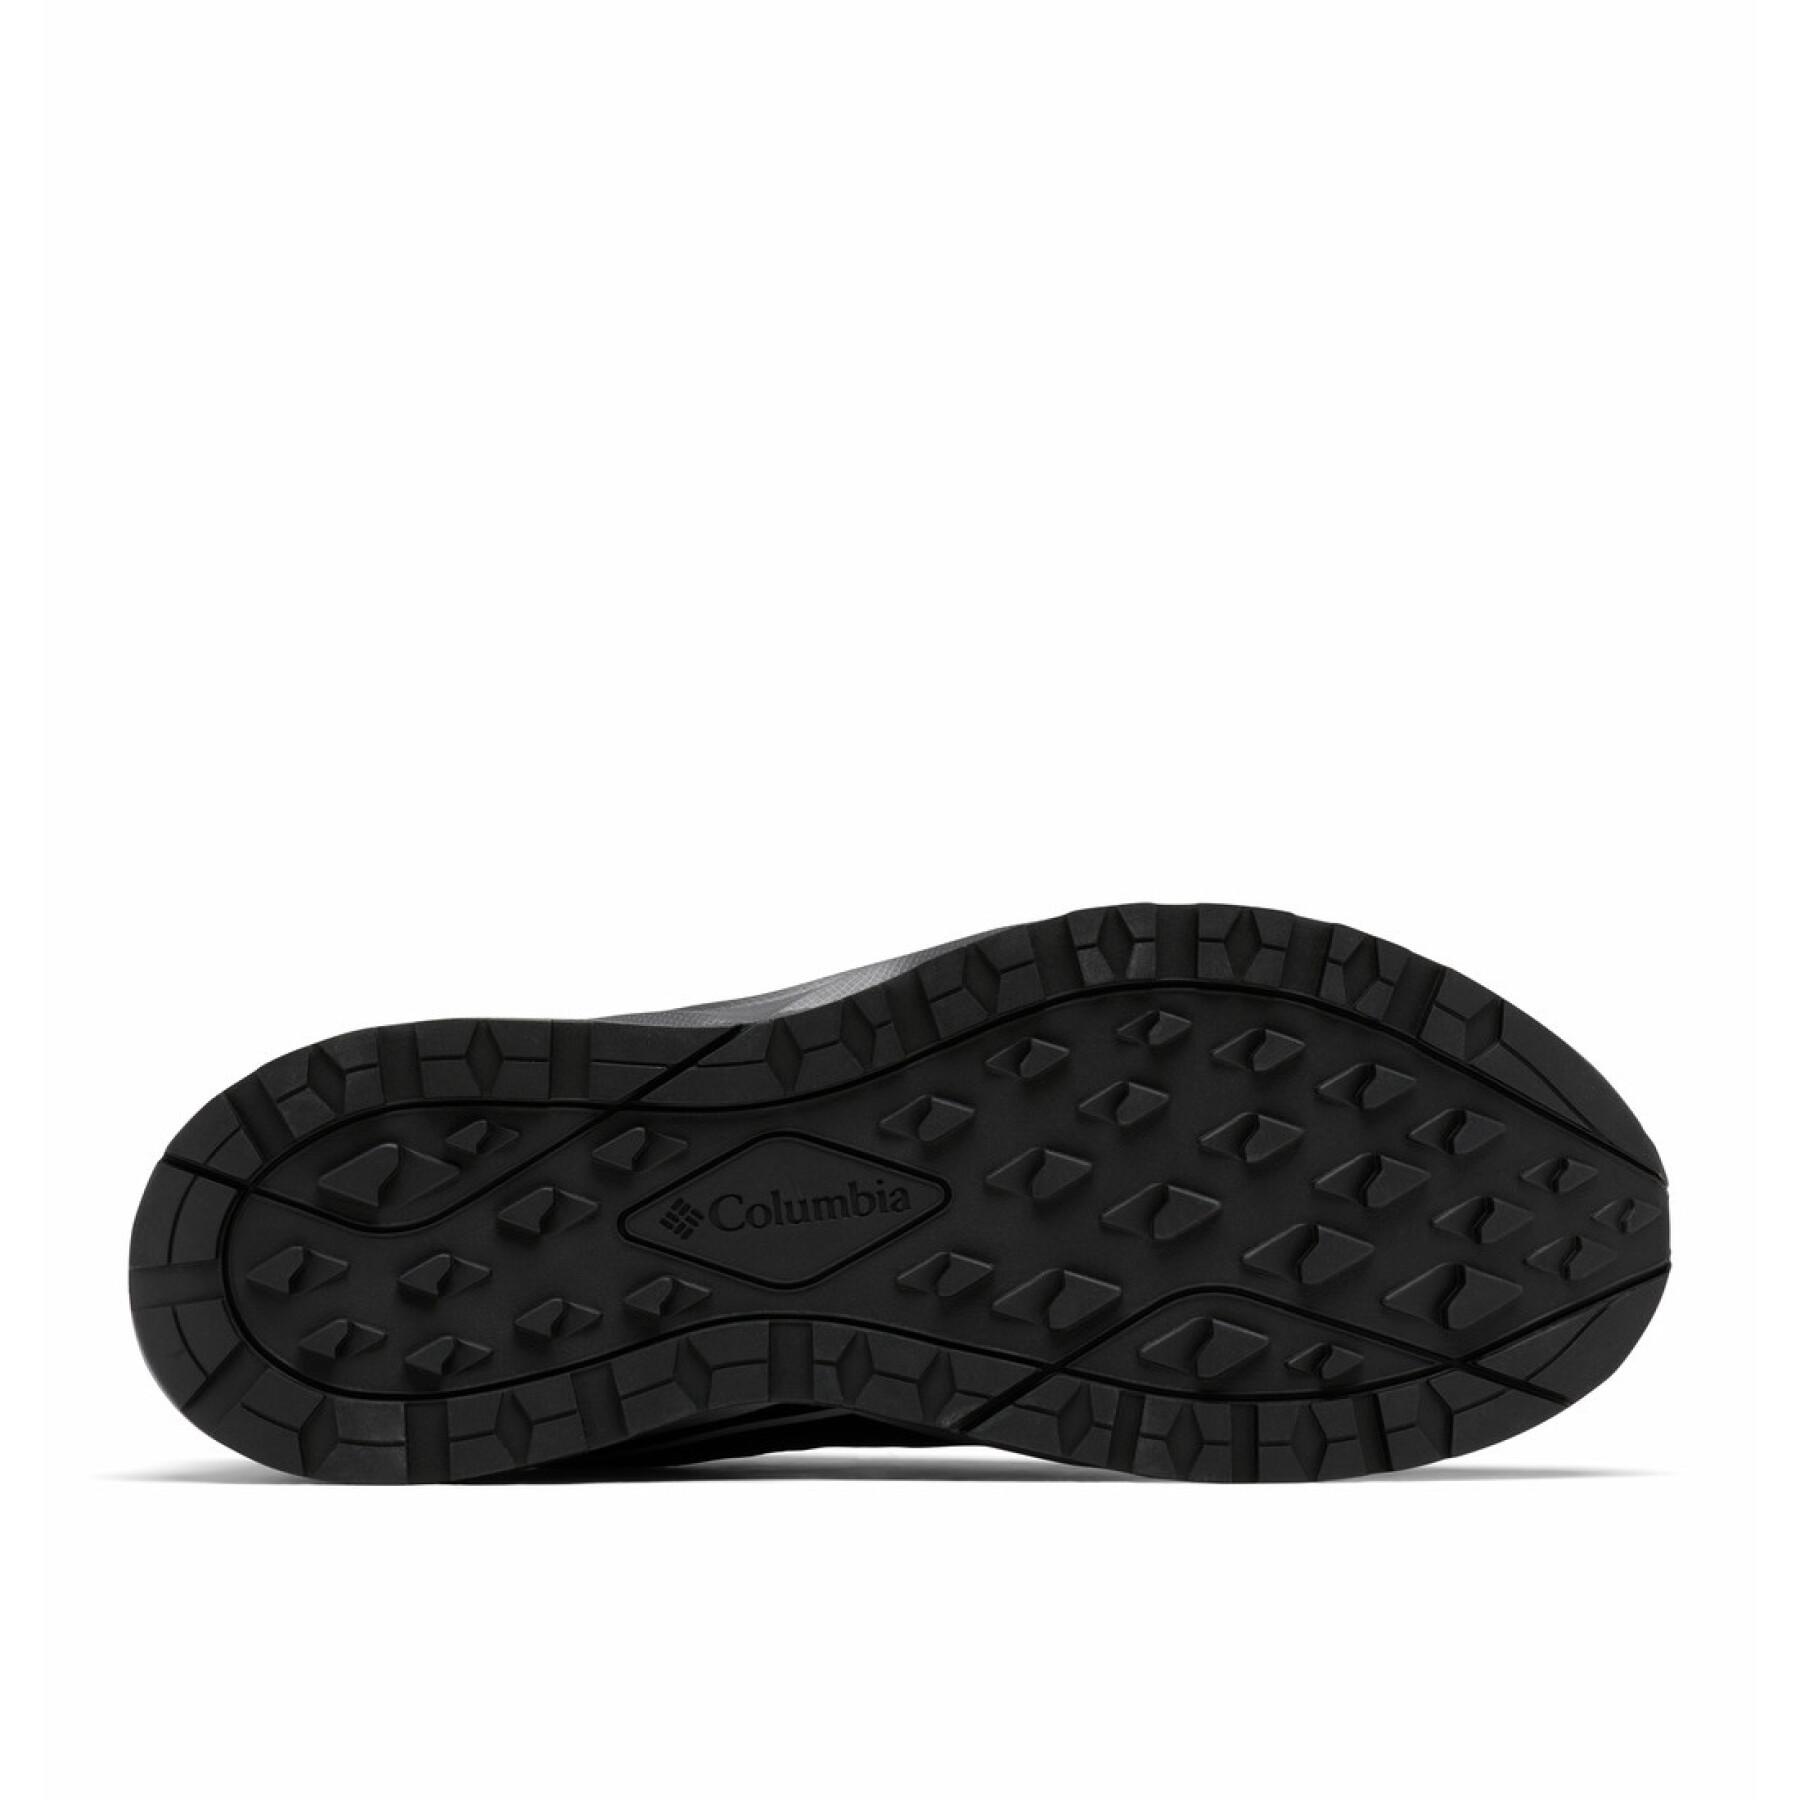 Shoes Columbia Plateau Waterproof